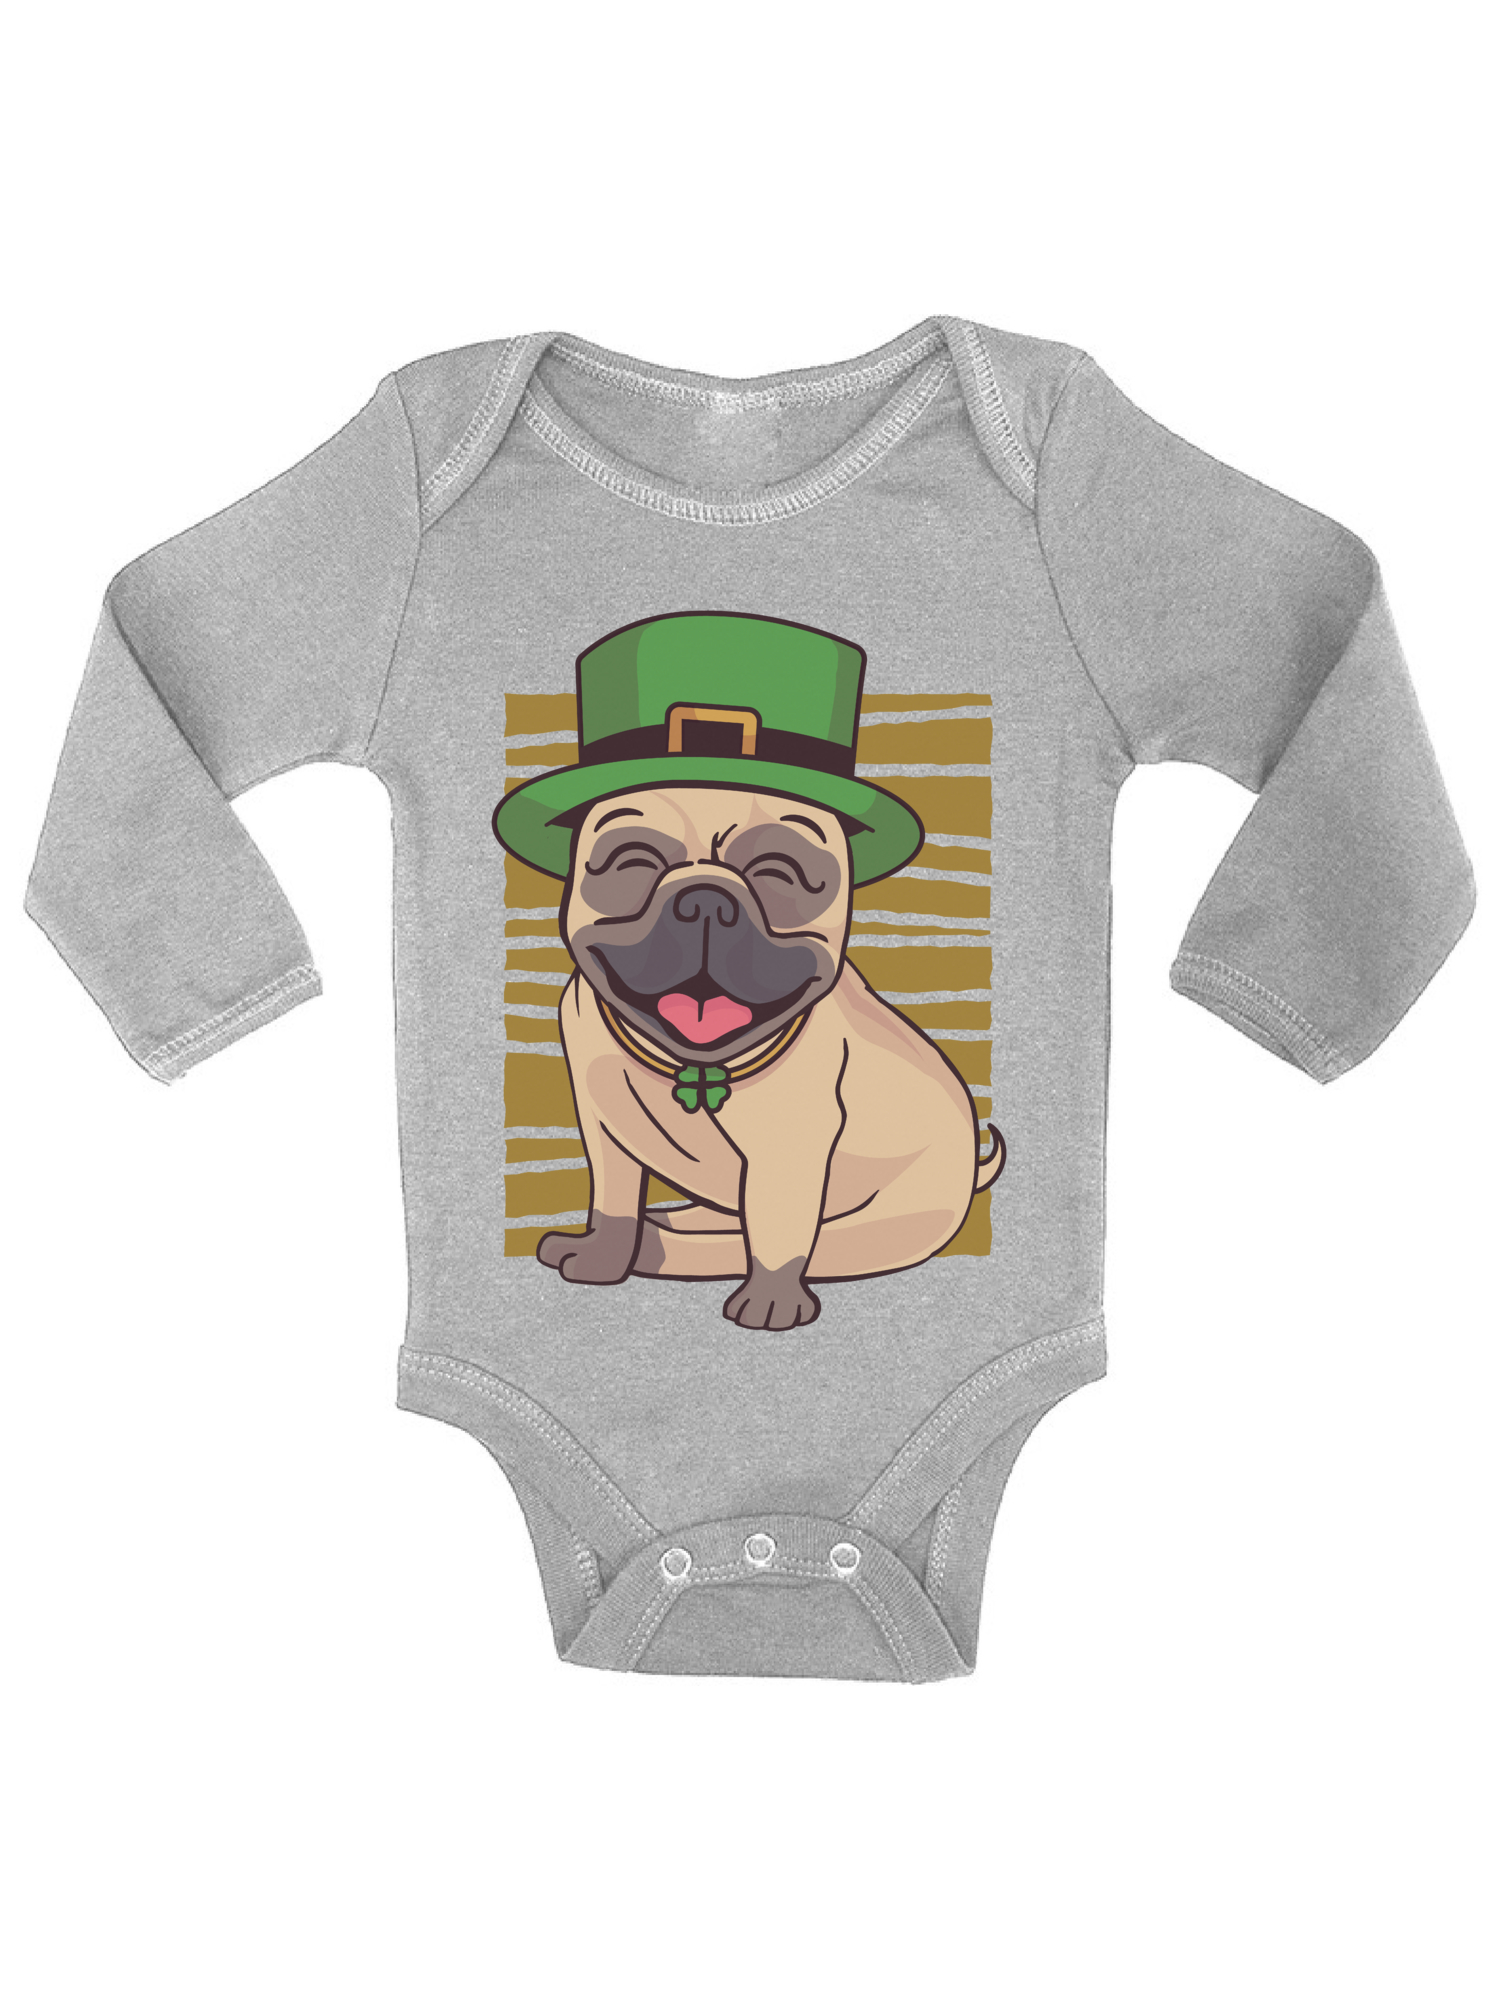 Awkward Styles Irish Day Bodysuit Pug in Green Hat Baby Romper Patrick's Day - image 1 of 4